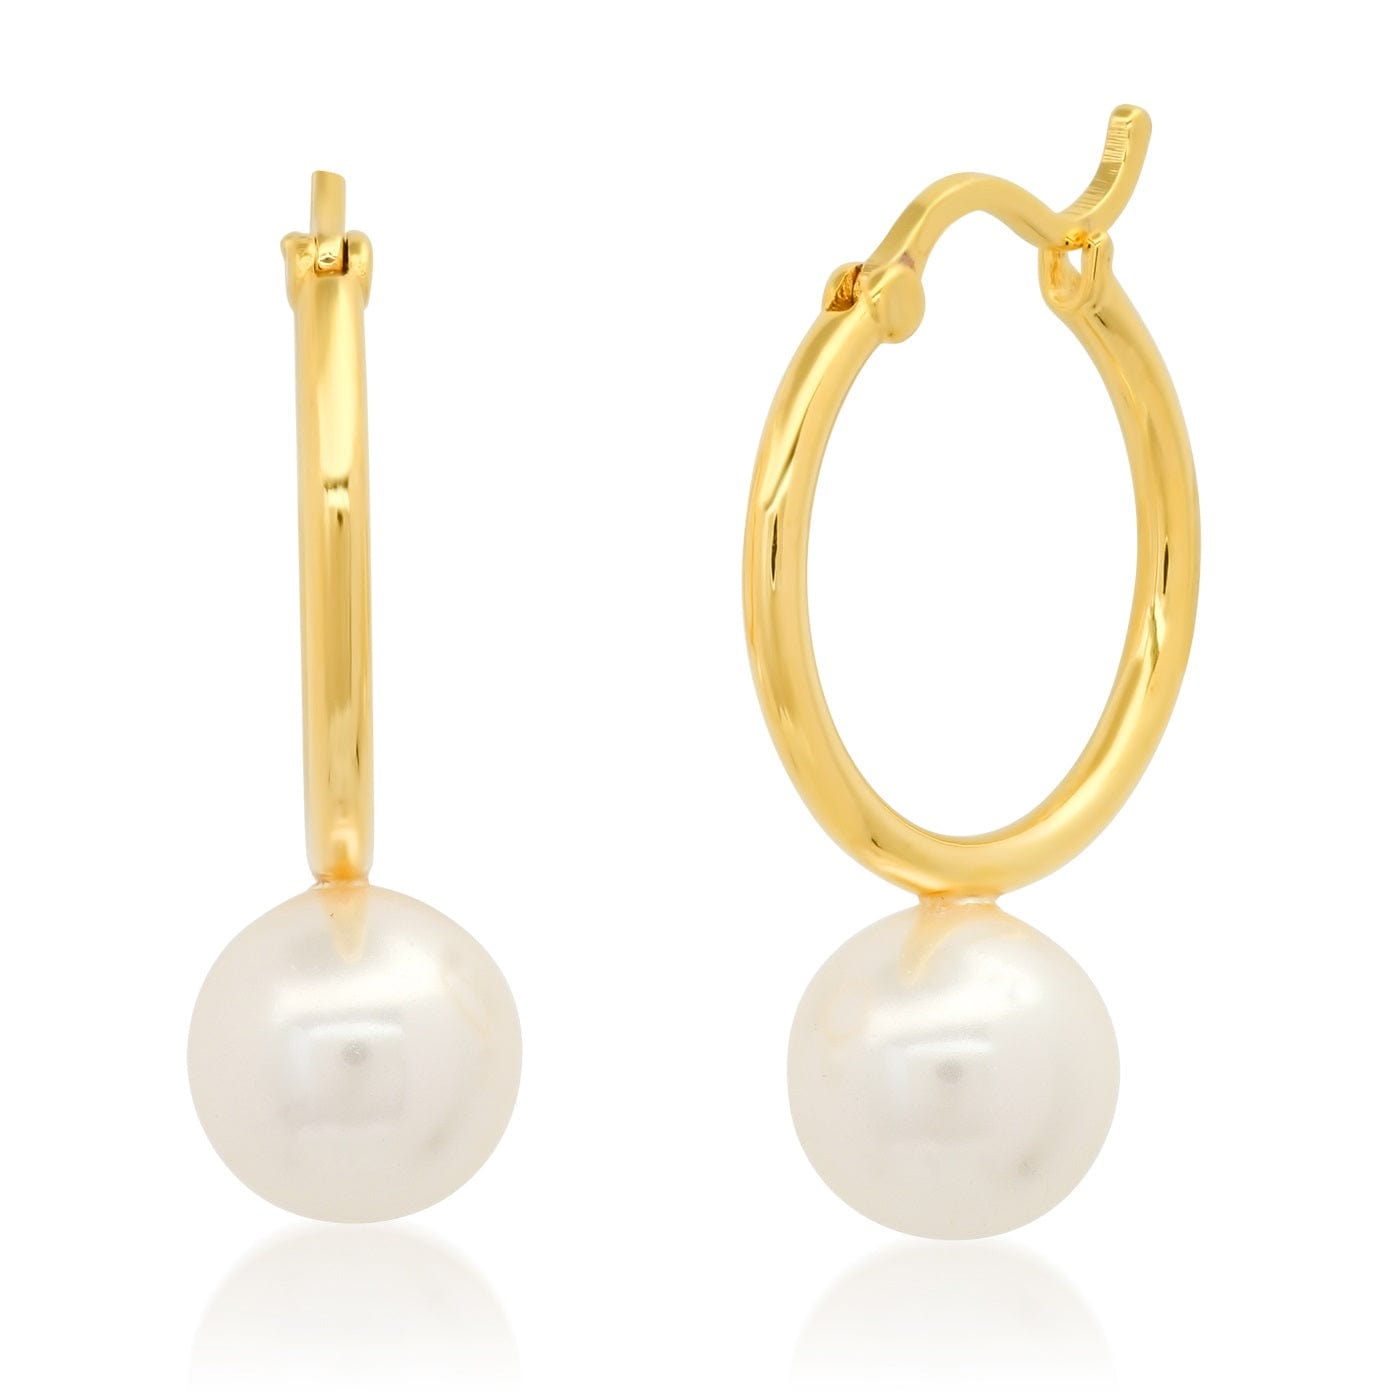 TAI JEWELRY Earrings Gold Vermeil Hoop with Pearl Charm